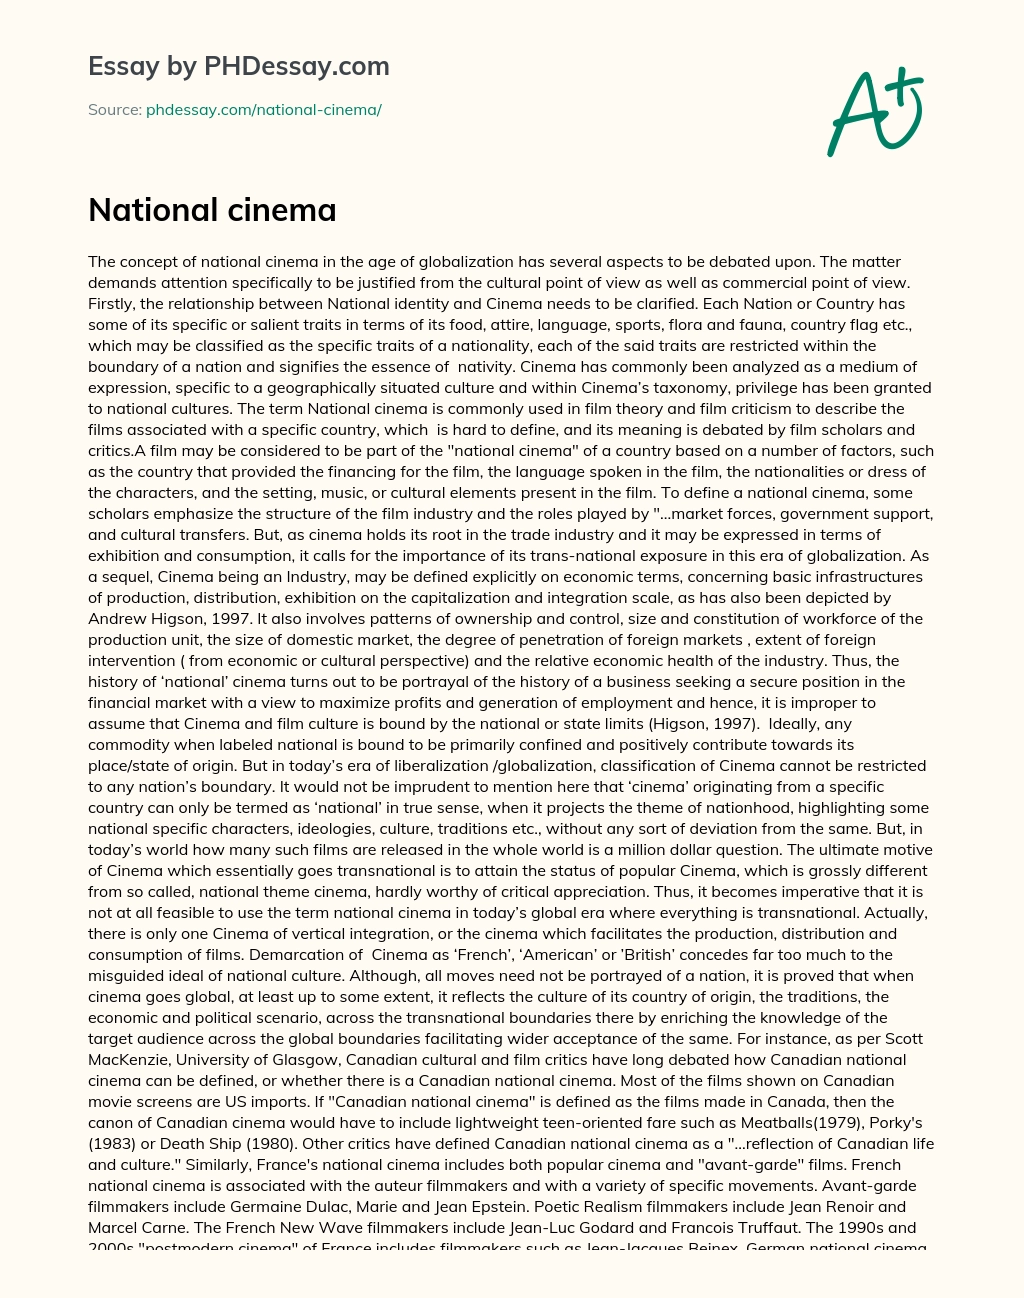 National cinema essay